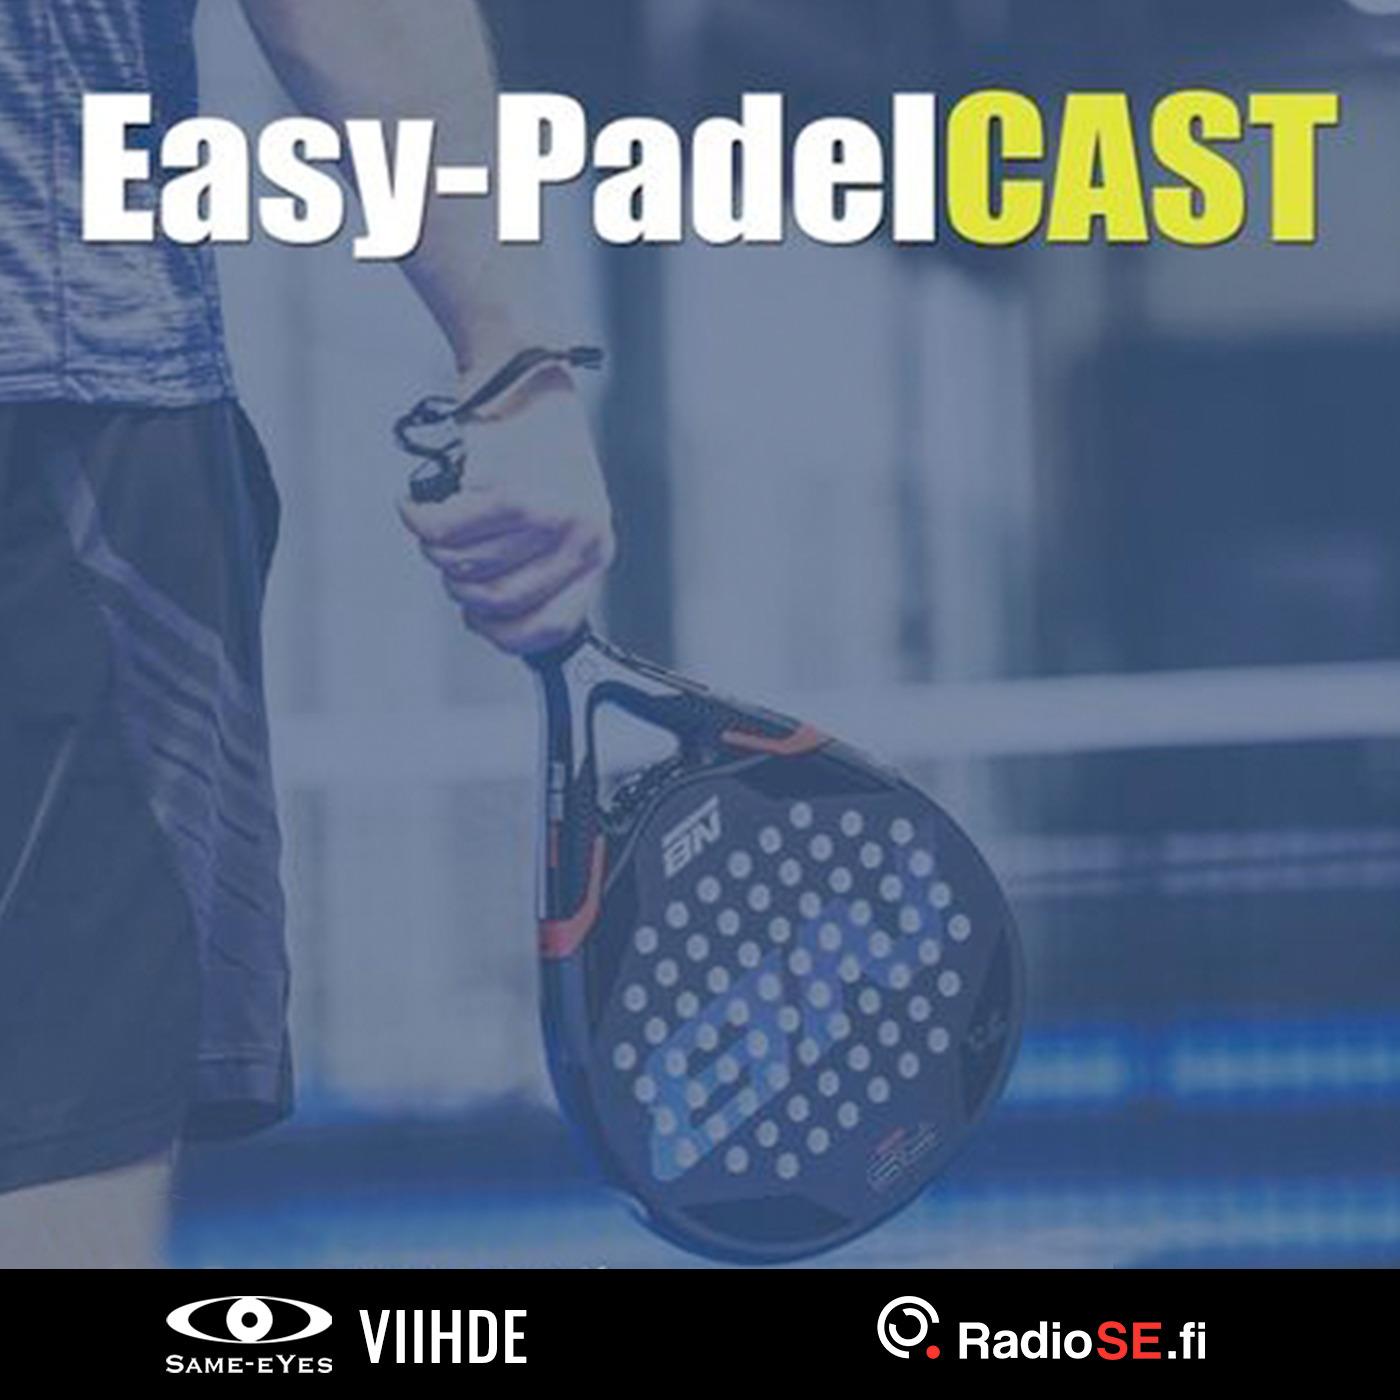 Easy-Padel CAST